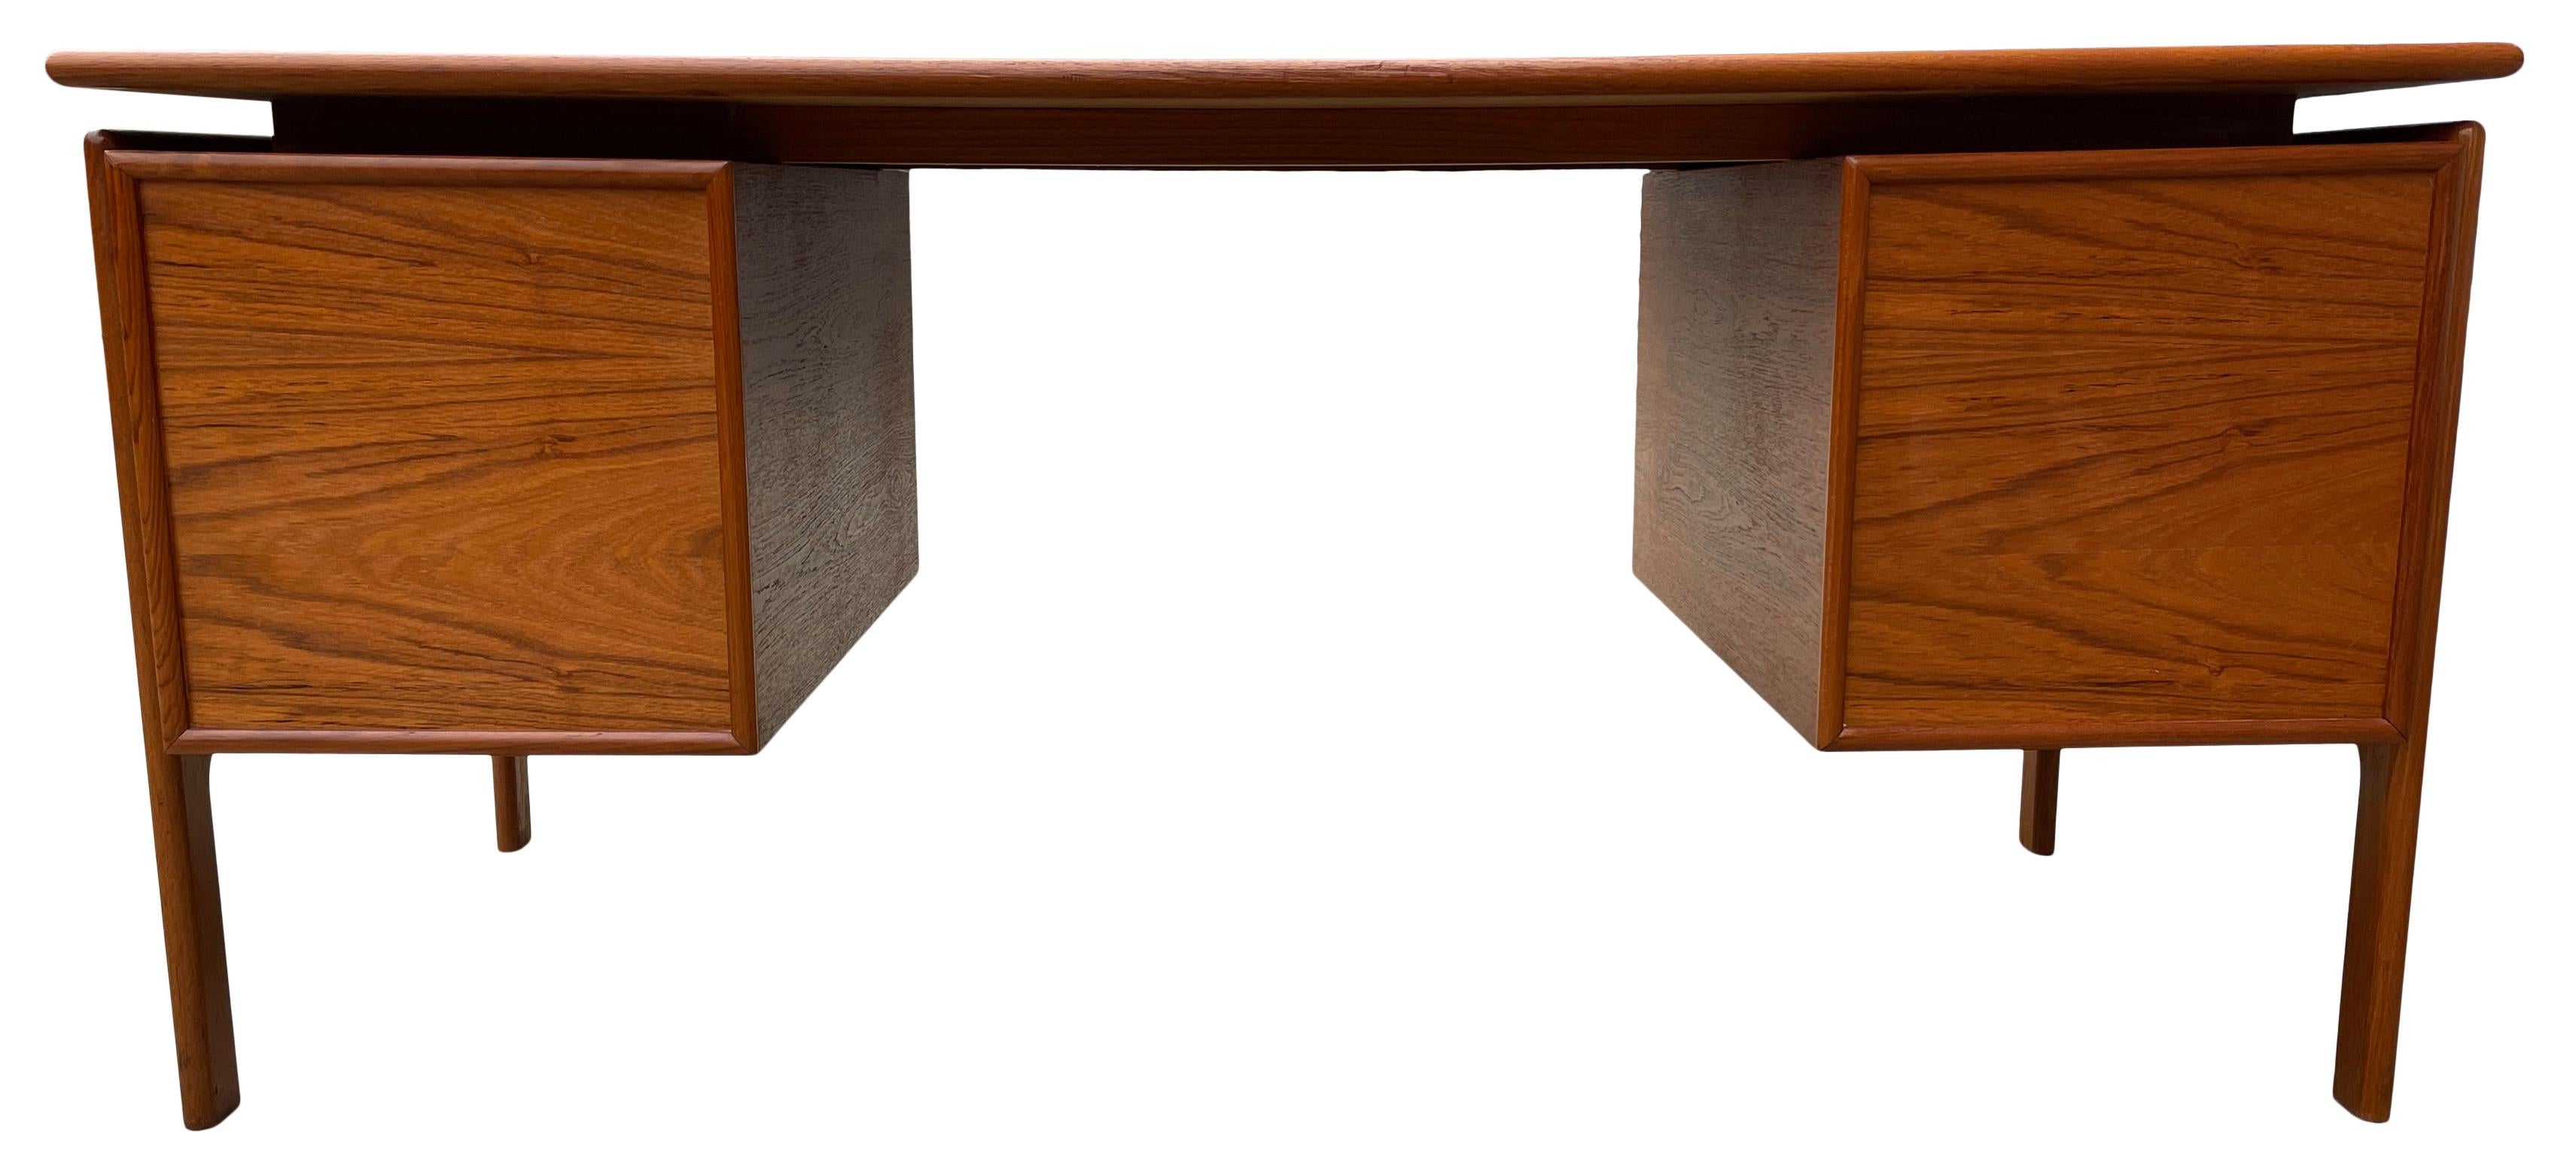 Midcentury Danish Modern Teak Large Knee Hole Desk 4 Drawers File Holder Clean 7